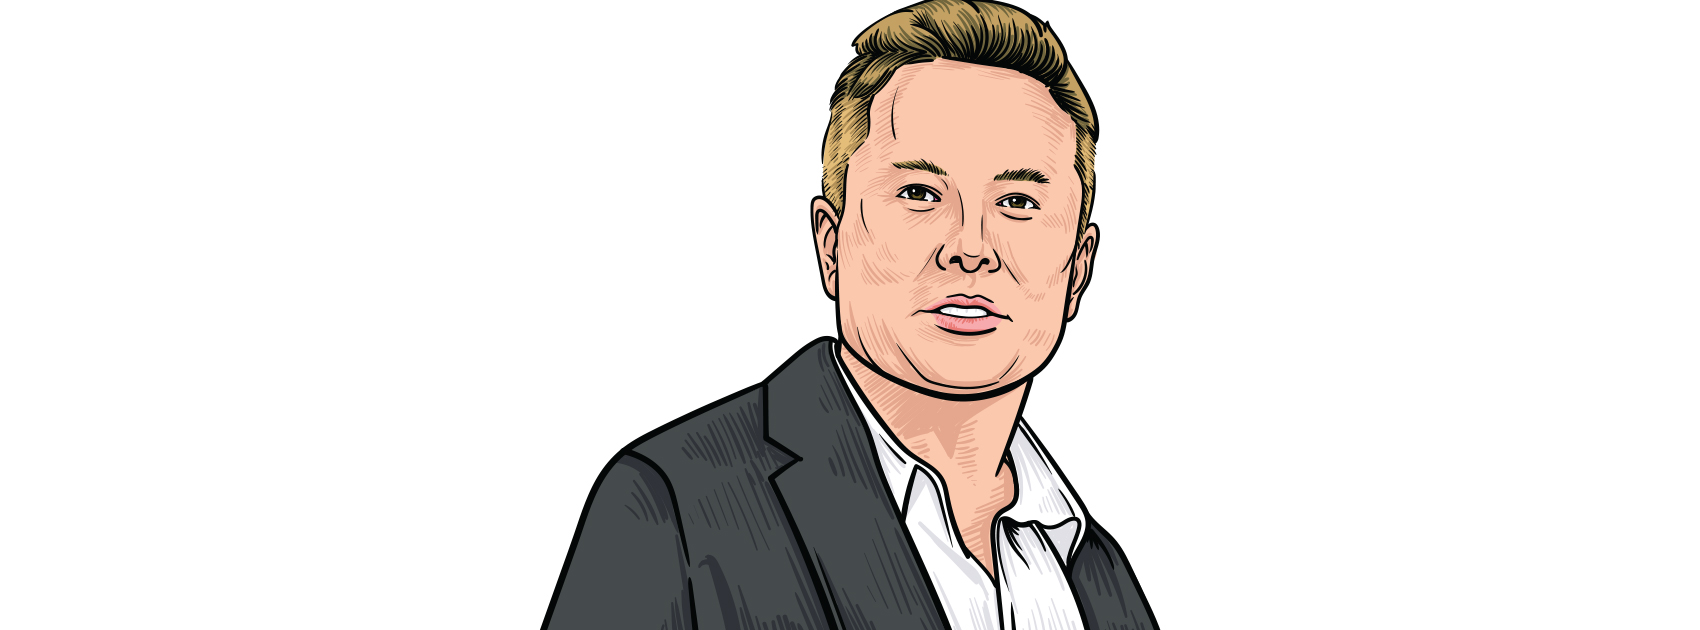 Elon Musk Life Lessons,Startup Stories,2019 Best Motivational Stories,Best Lessons From Elon Musk,Elon Musk Inspiring Life Lessons,Real Life Inspiring Stories of Success,Elon Musk Success Lessons,Elon Musk Powerful Leadership Lessons,Elon Musk Success Tips